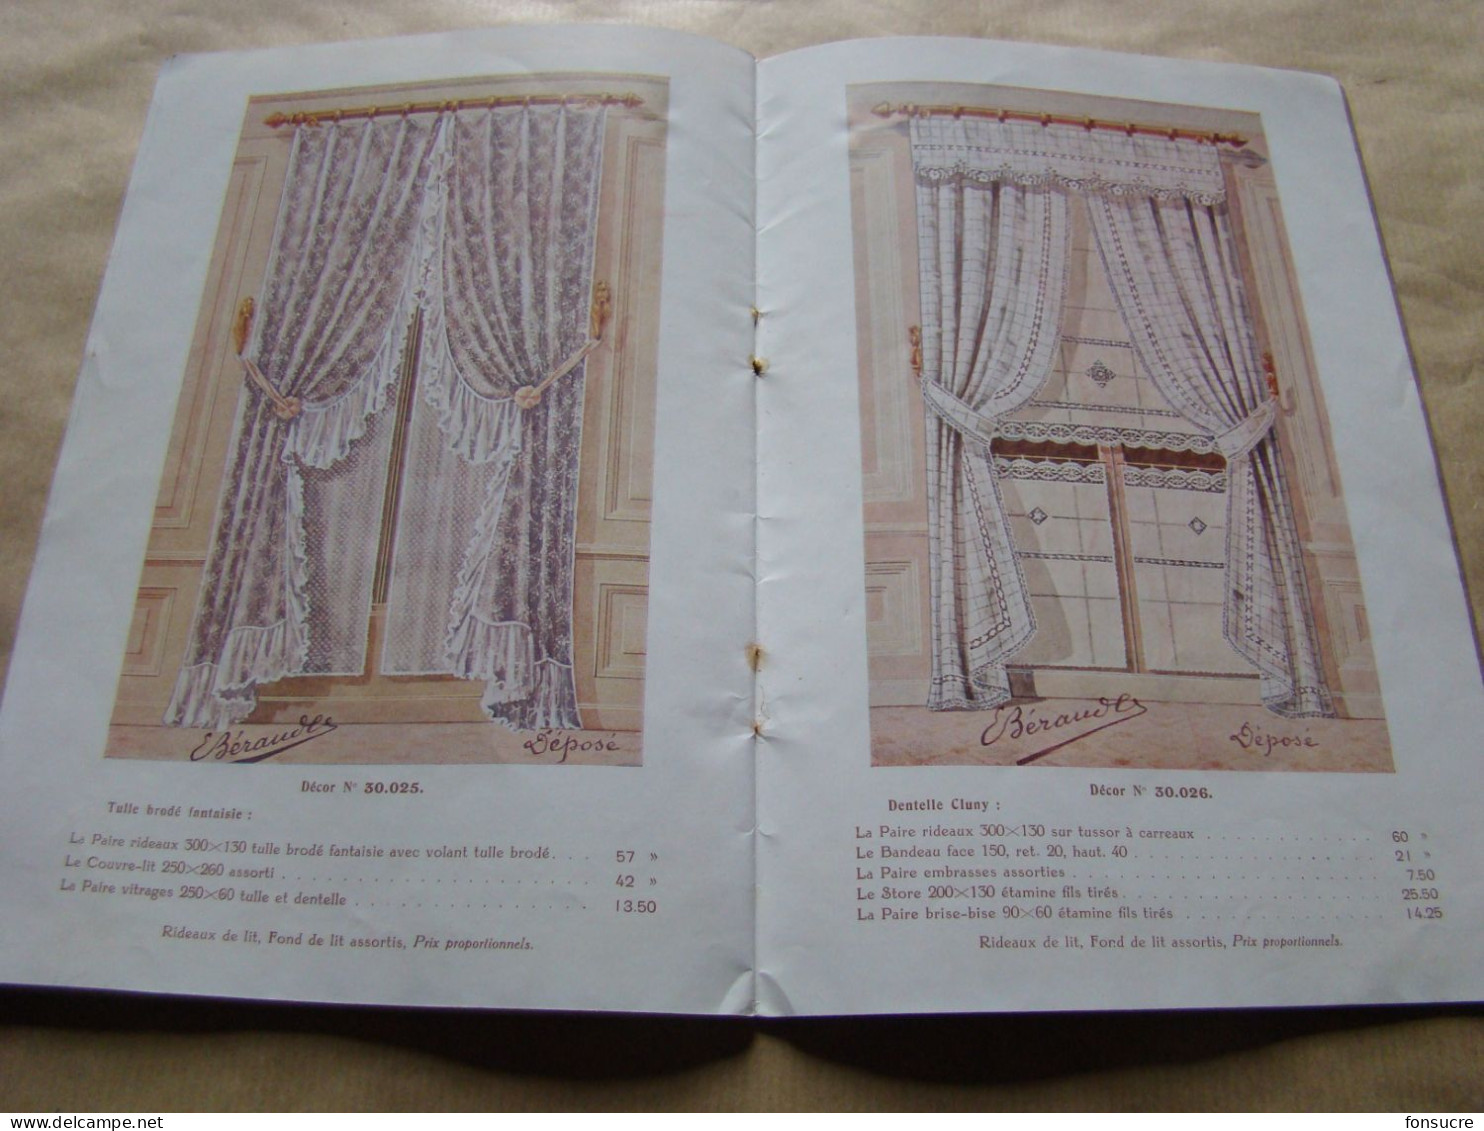 VR20 Catalogue des Tentures Artistiques n°33 BERAUD & Cie Etoffe Broderie Dentelle 24 pages vers 1920